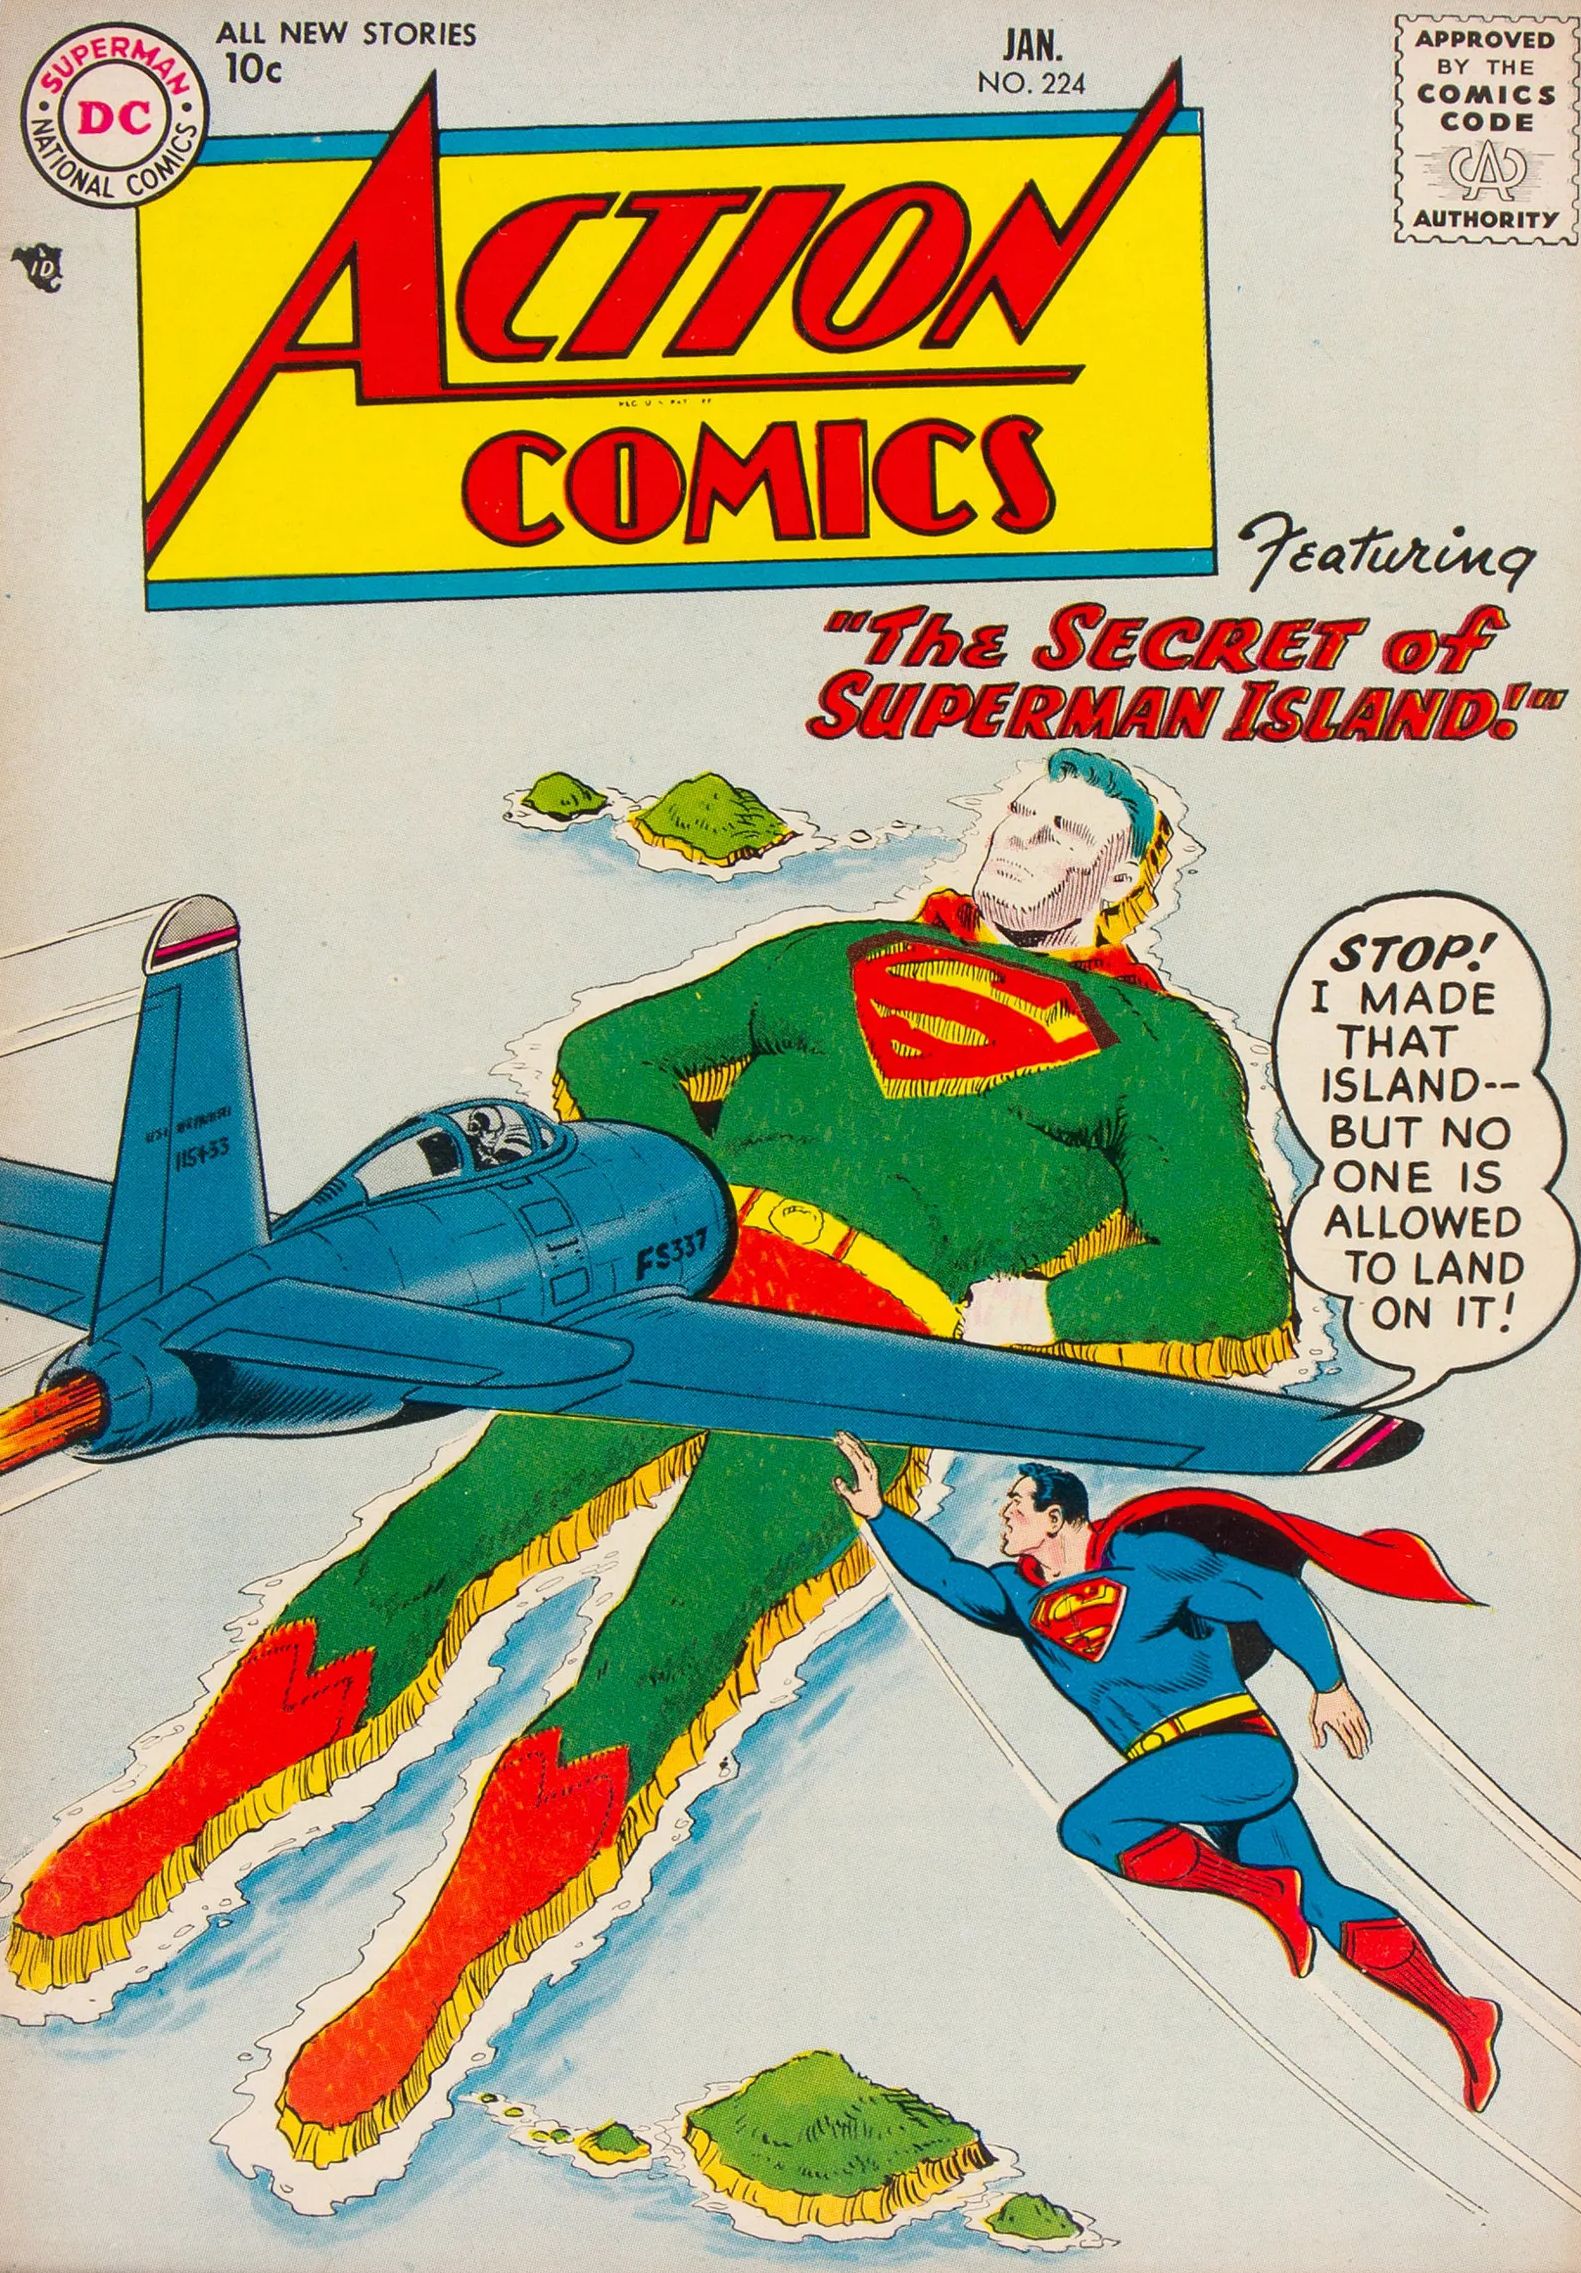 Action Comics #224 Comic